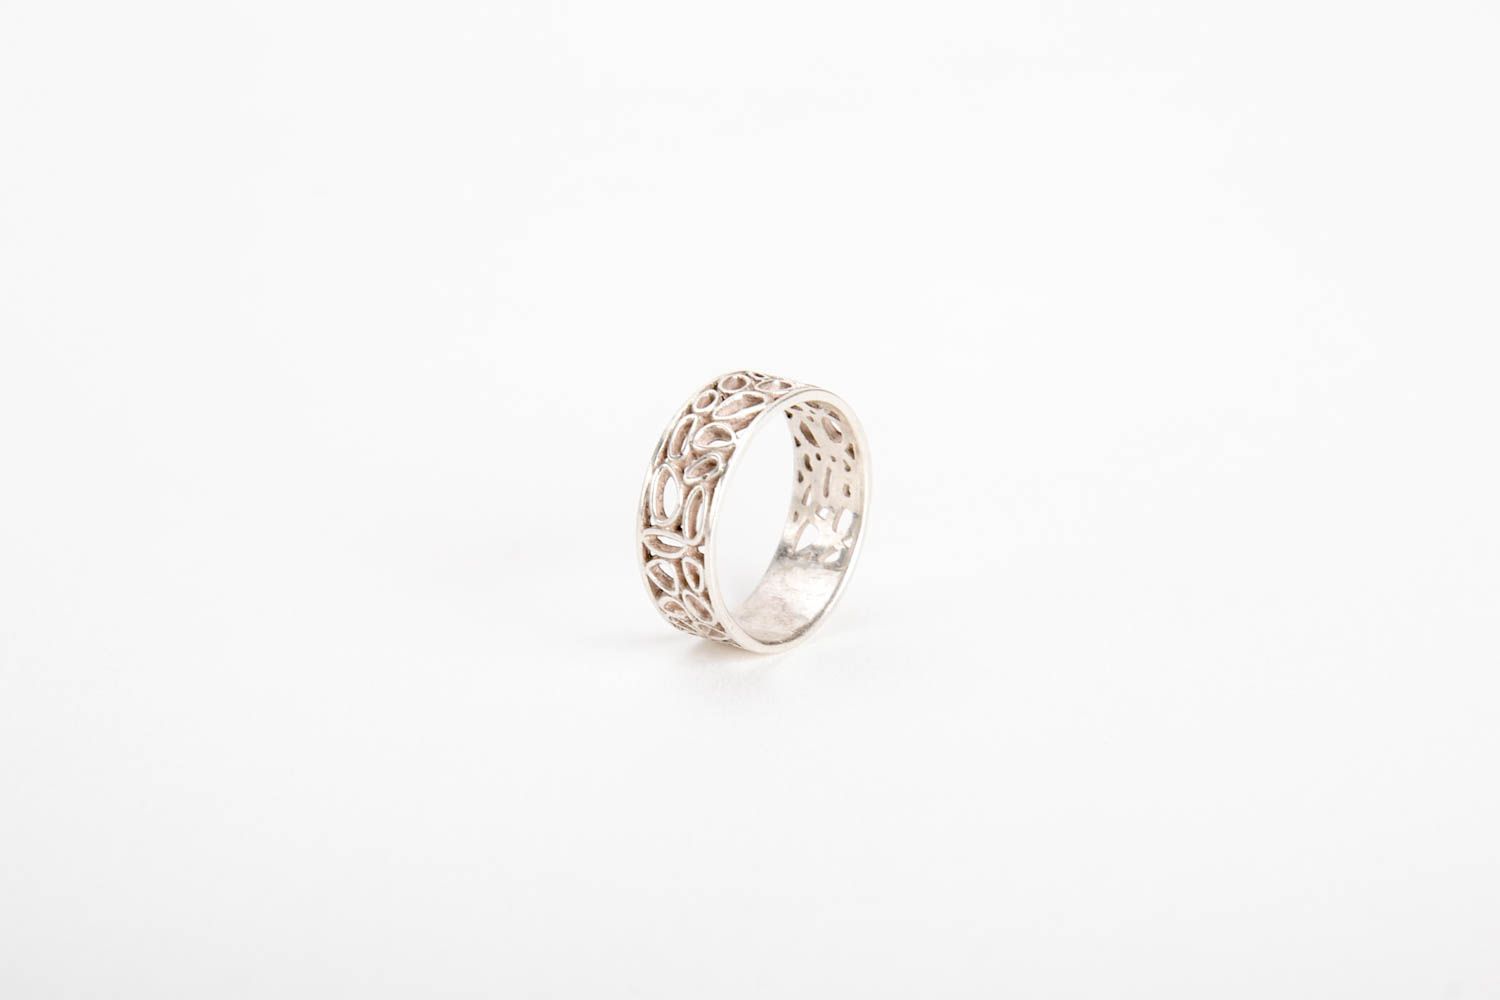 Beautiful handmade womens ring designs fine silver ring elite jewelry gift ideas photo 3